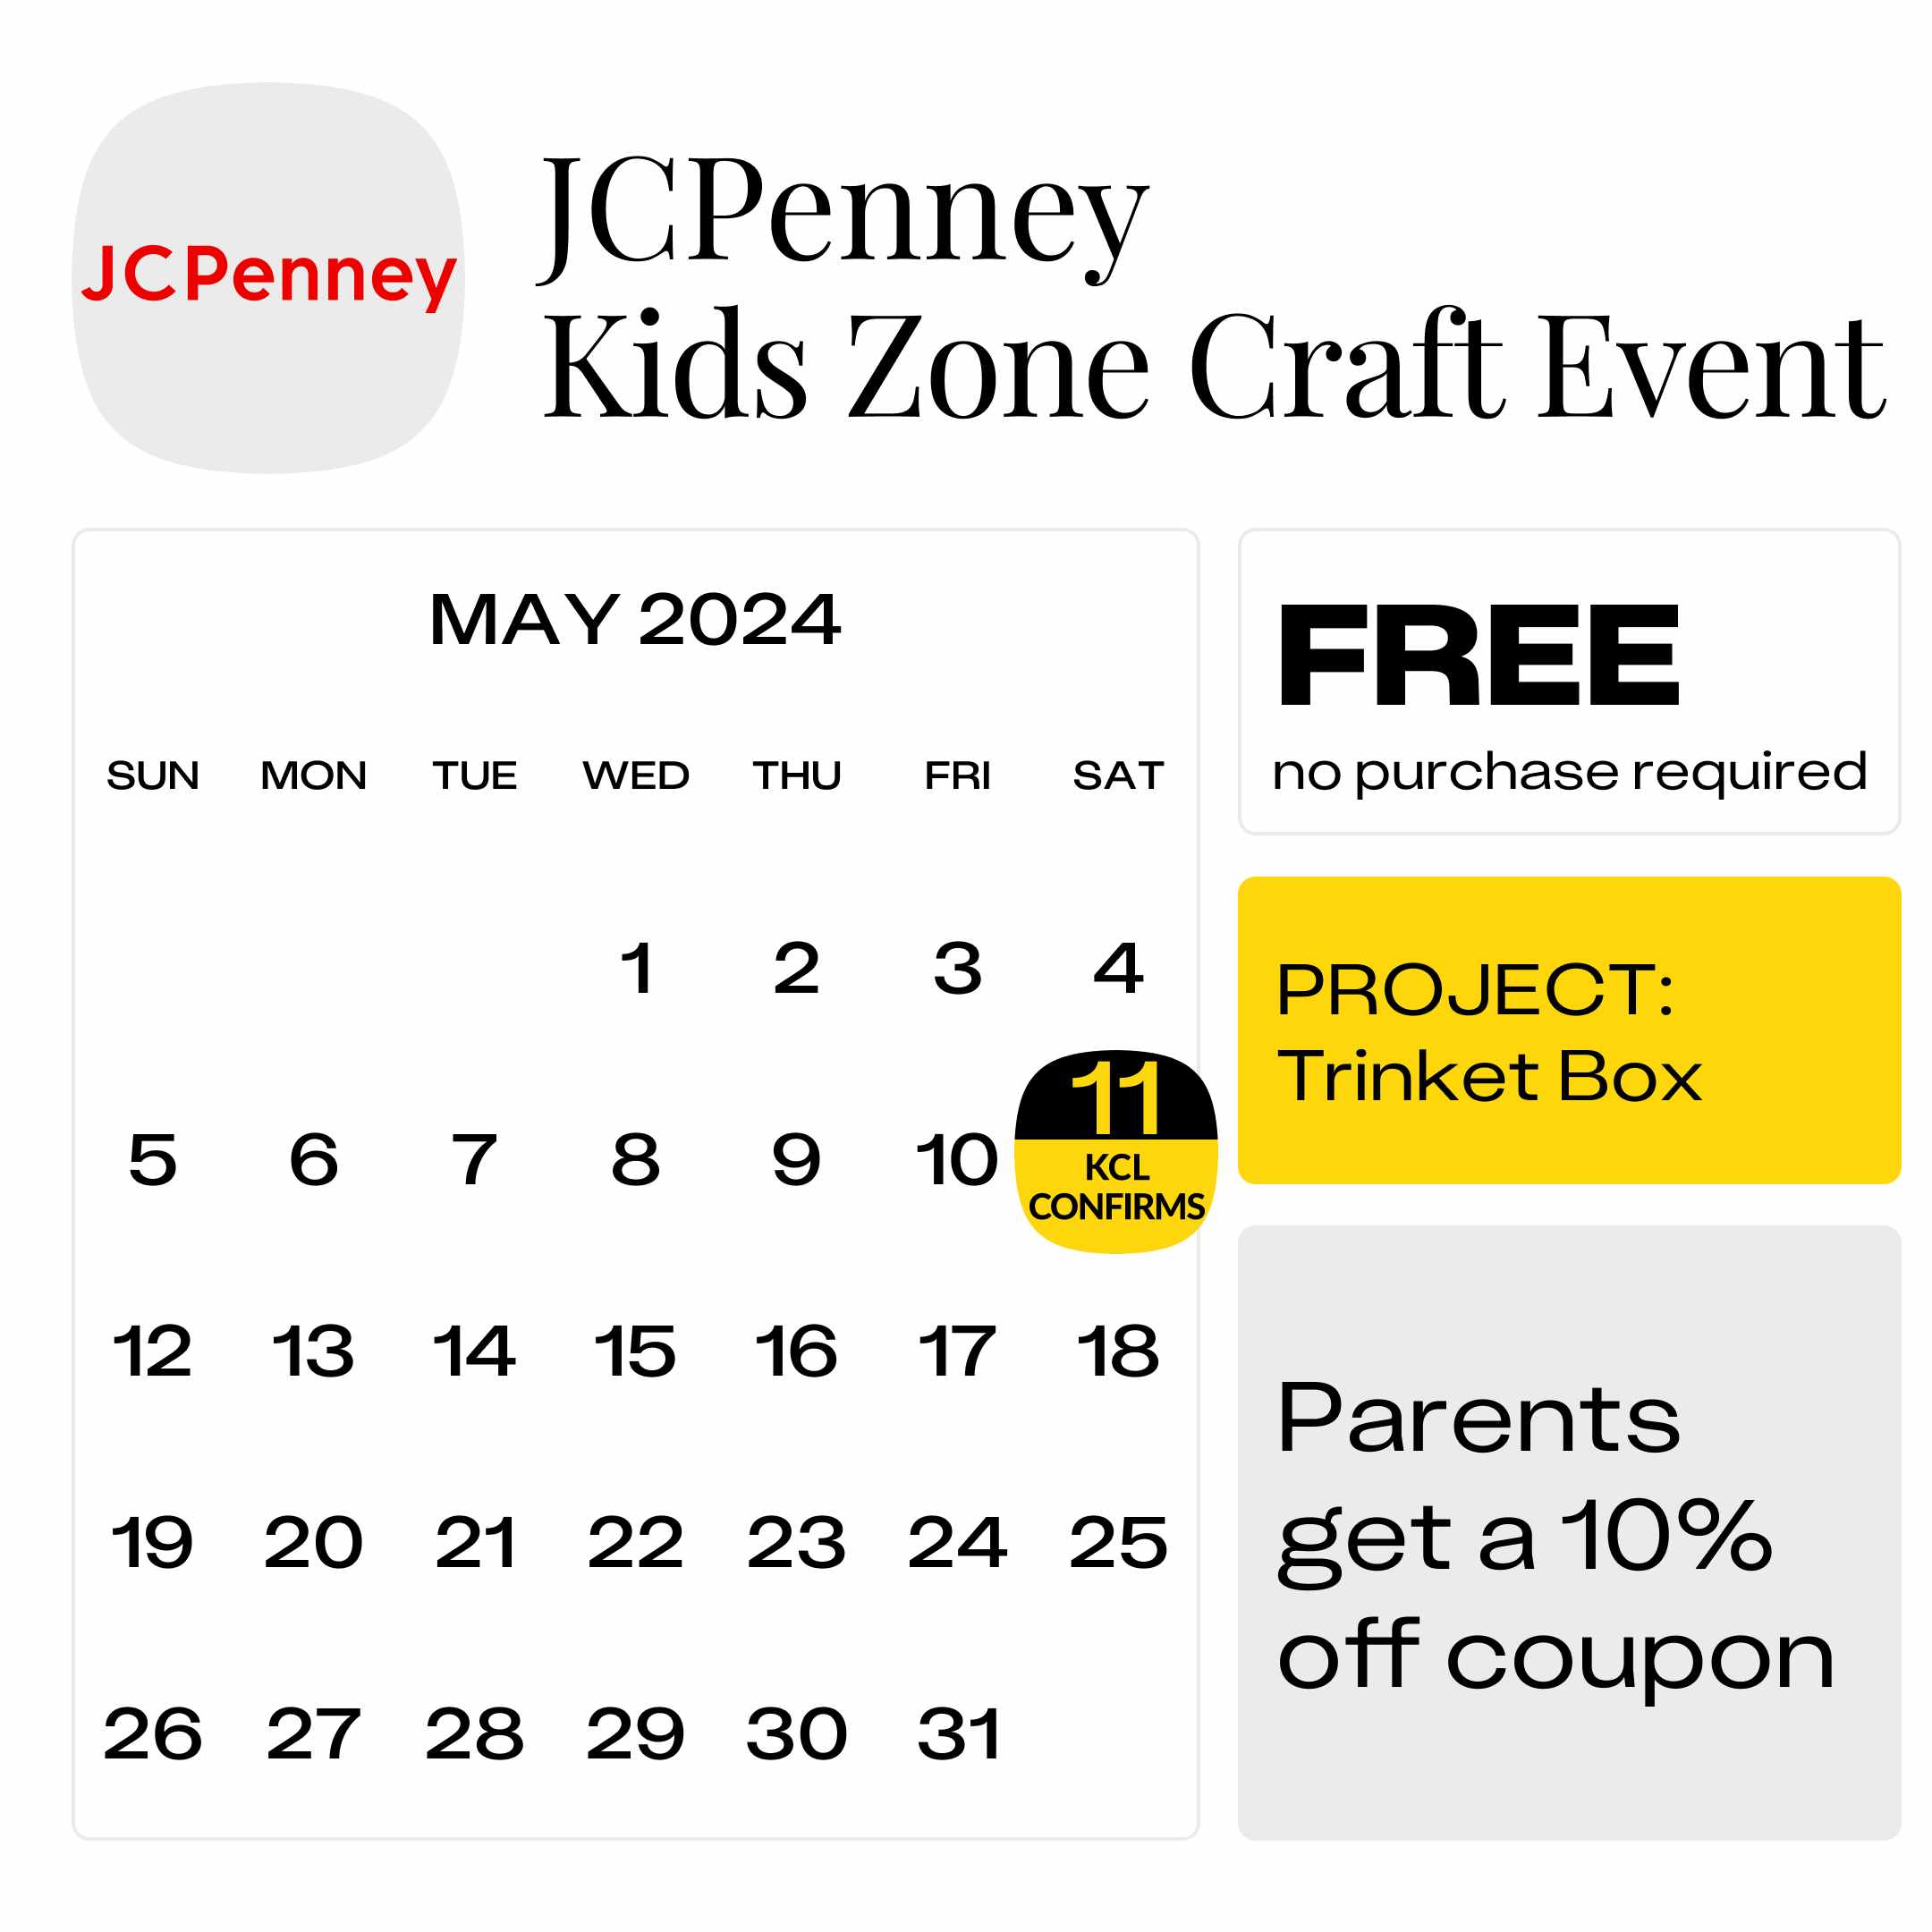 JCP-Kids-Zone-Craft-Event